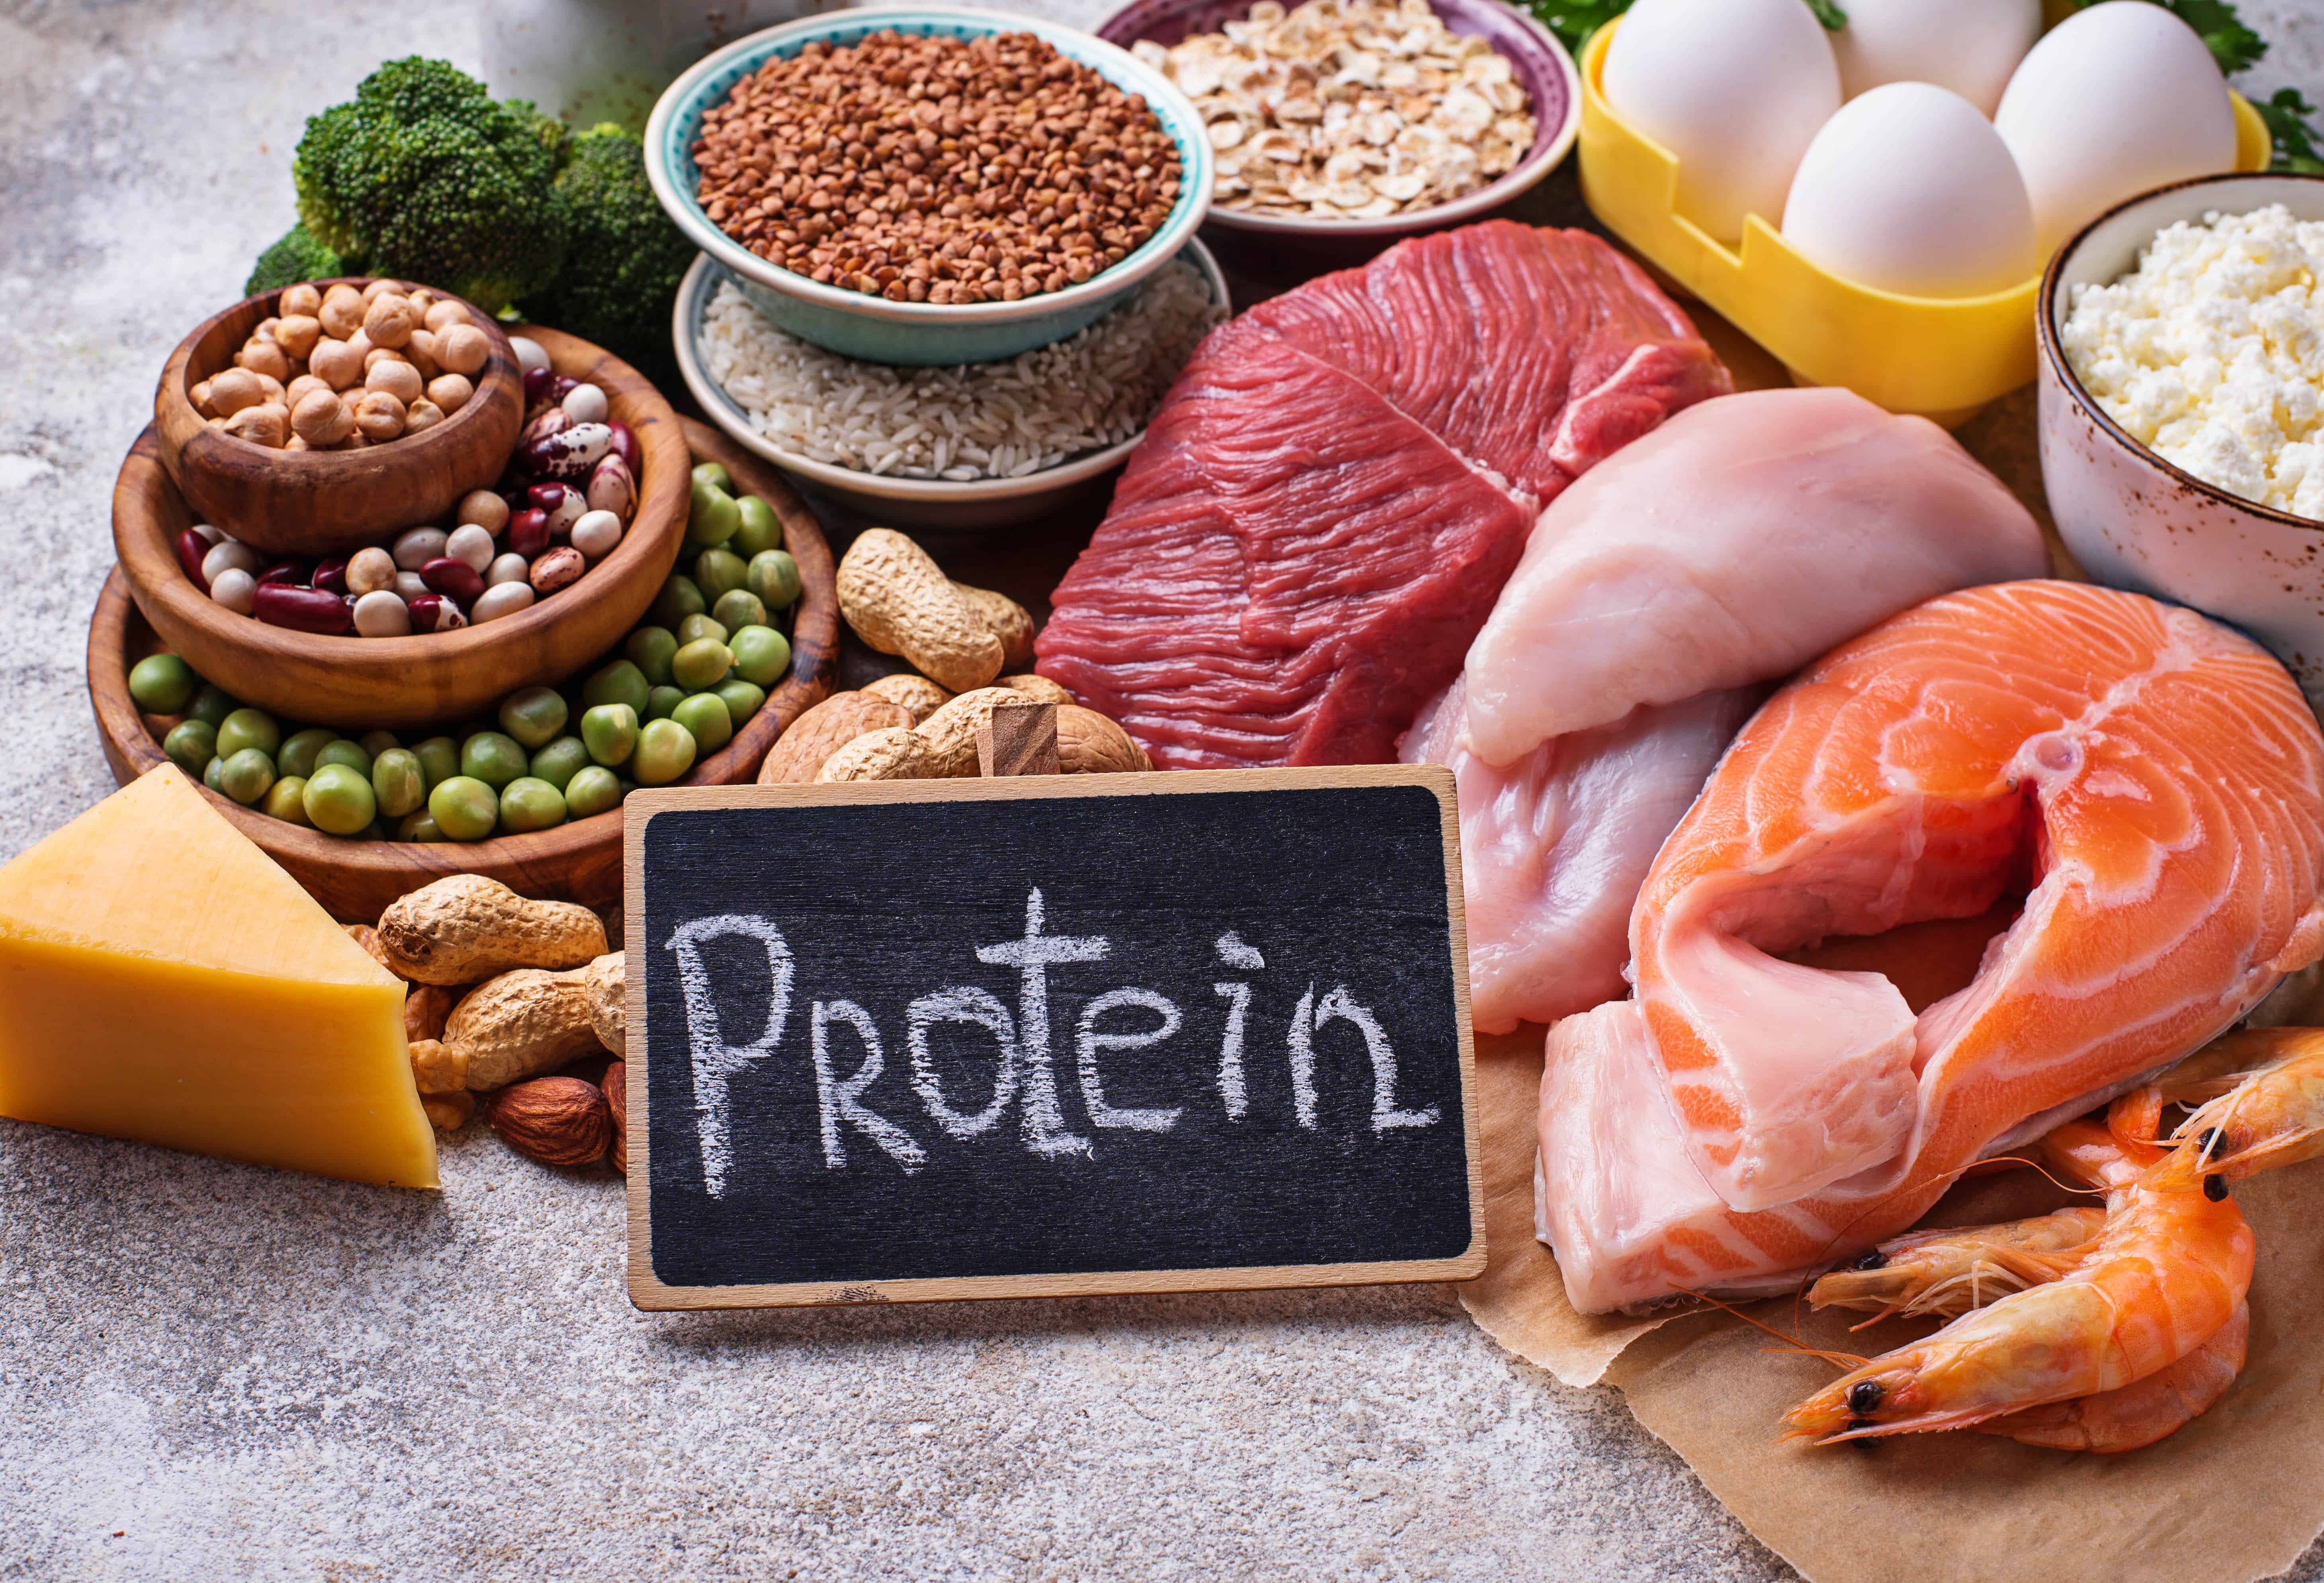 Kako proteinska dijeta utječe na zdravlje bubrega?